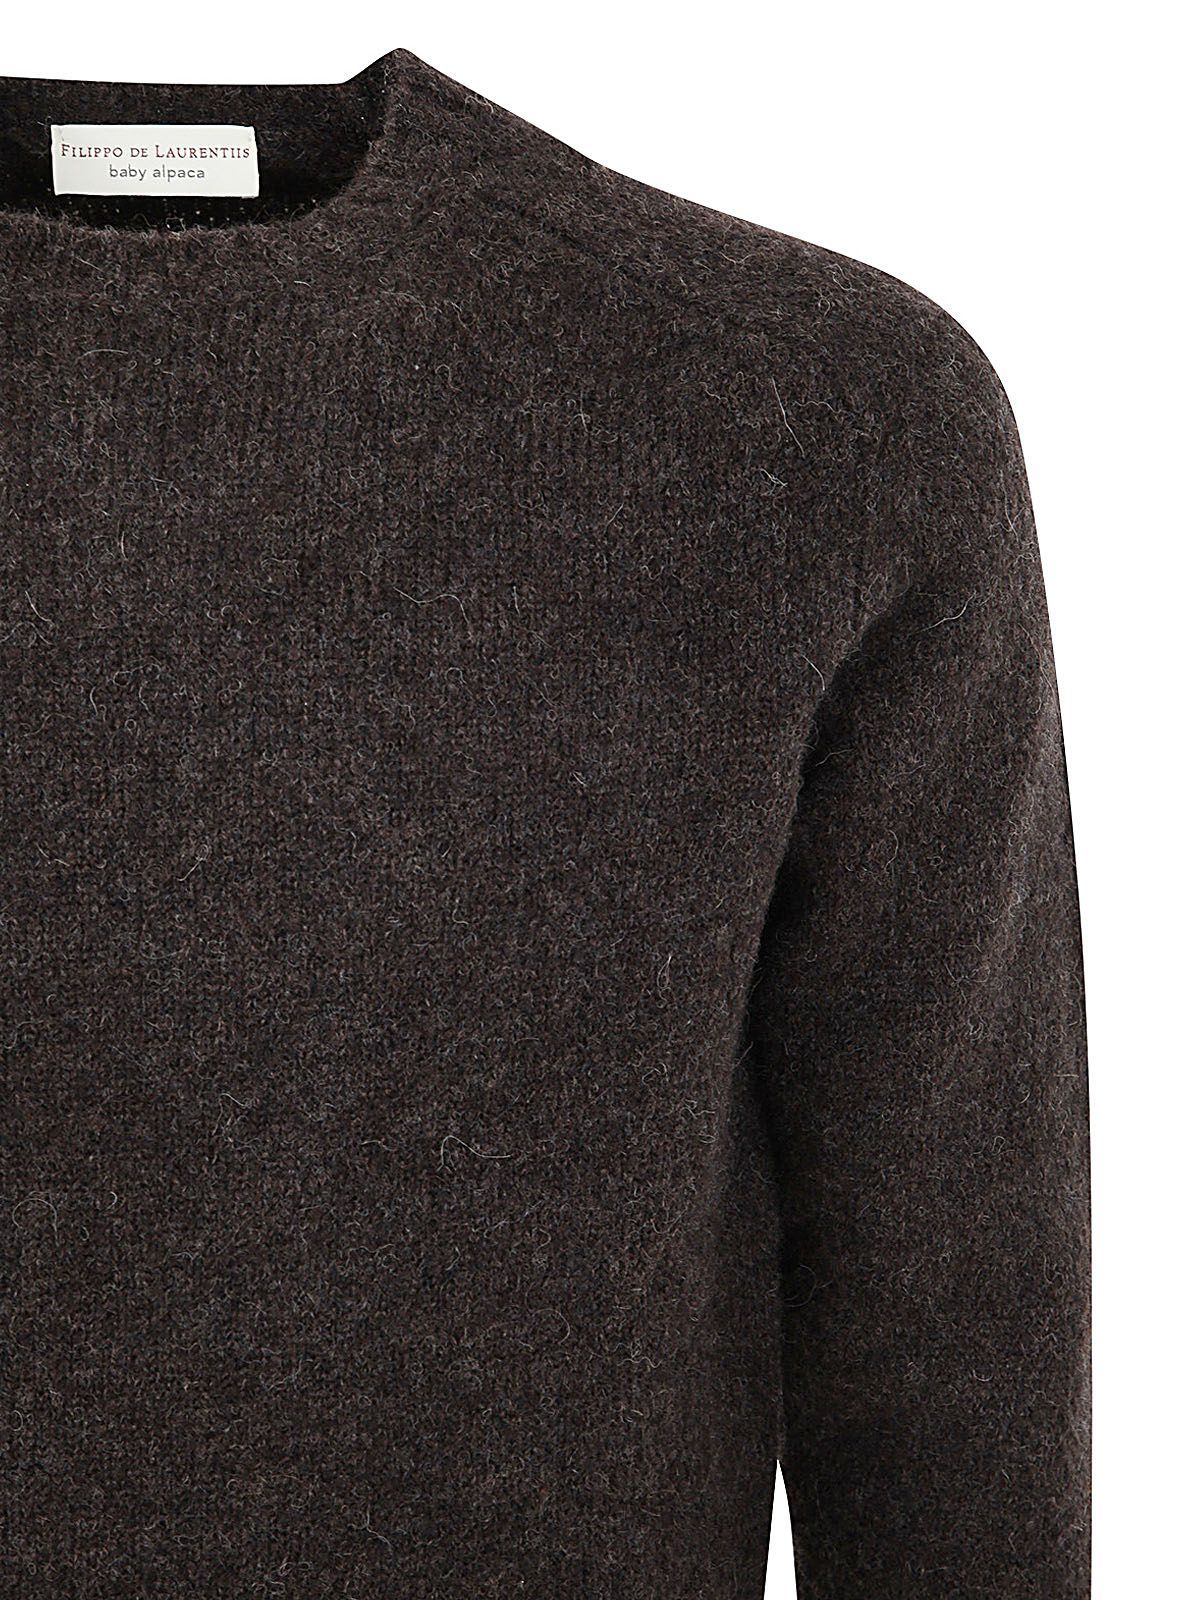 Shop Filippo De Laurentiis Hammer Long Sleeve Round Neck Pullover